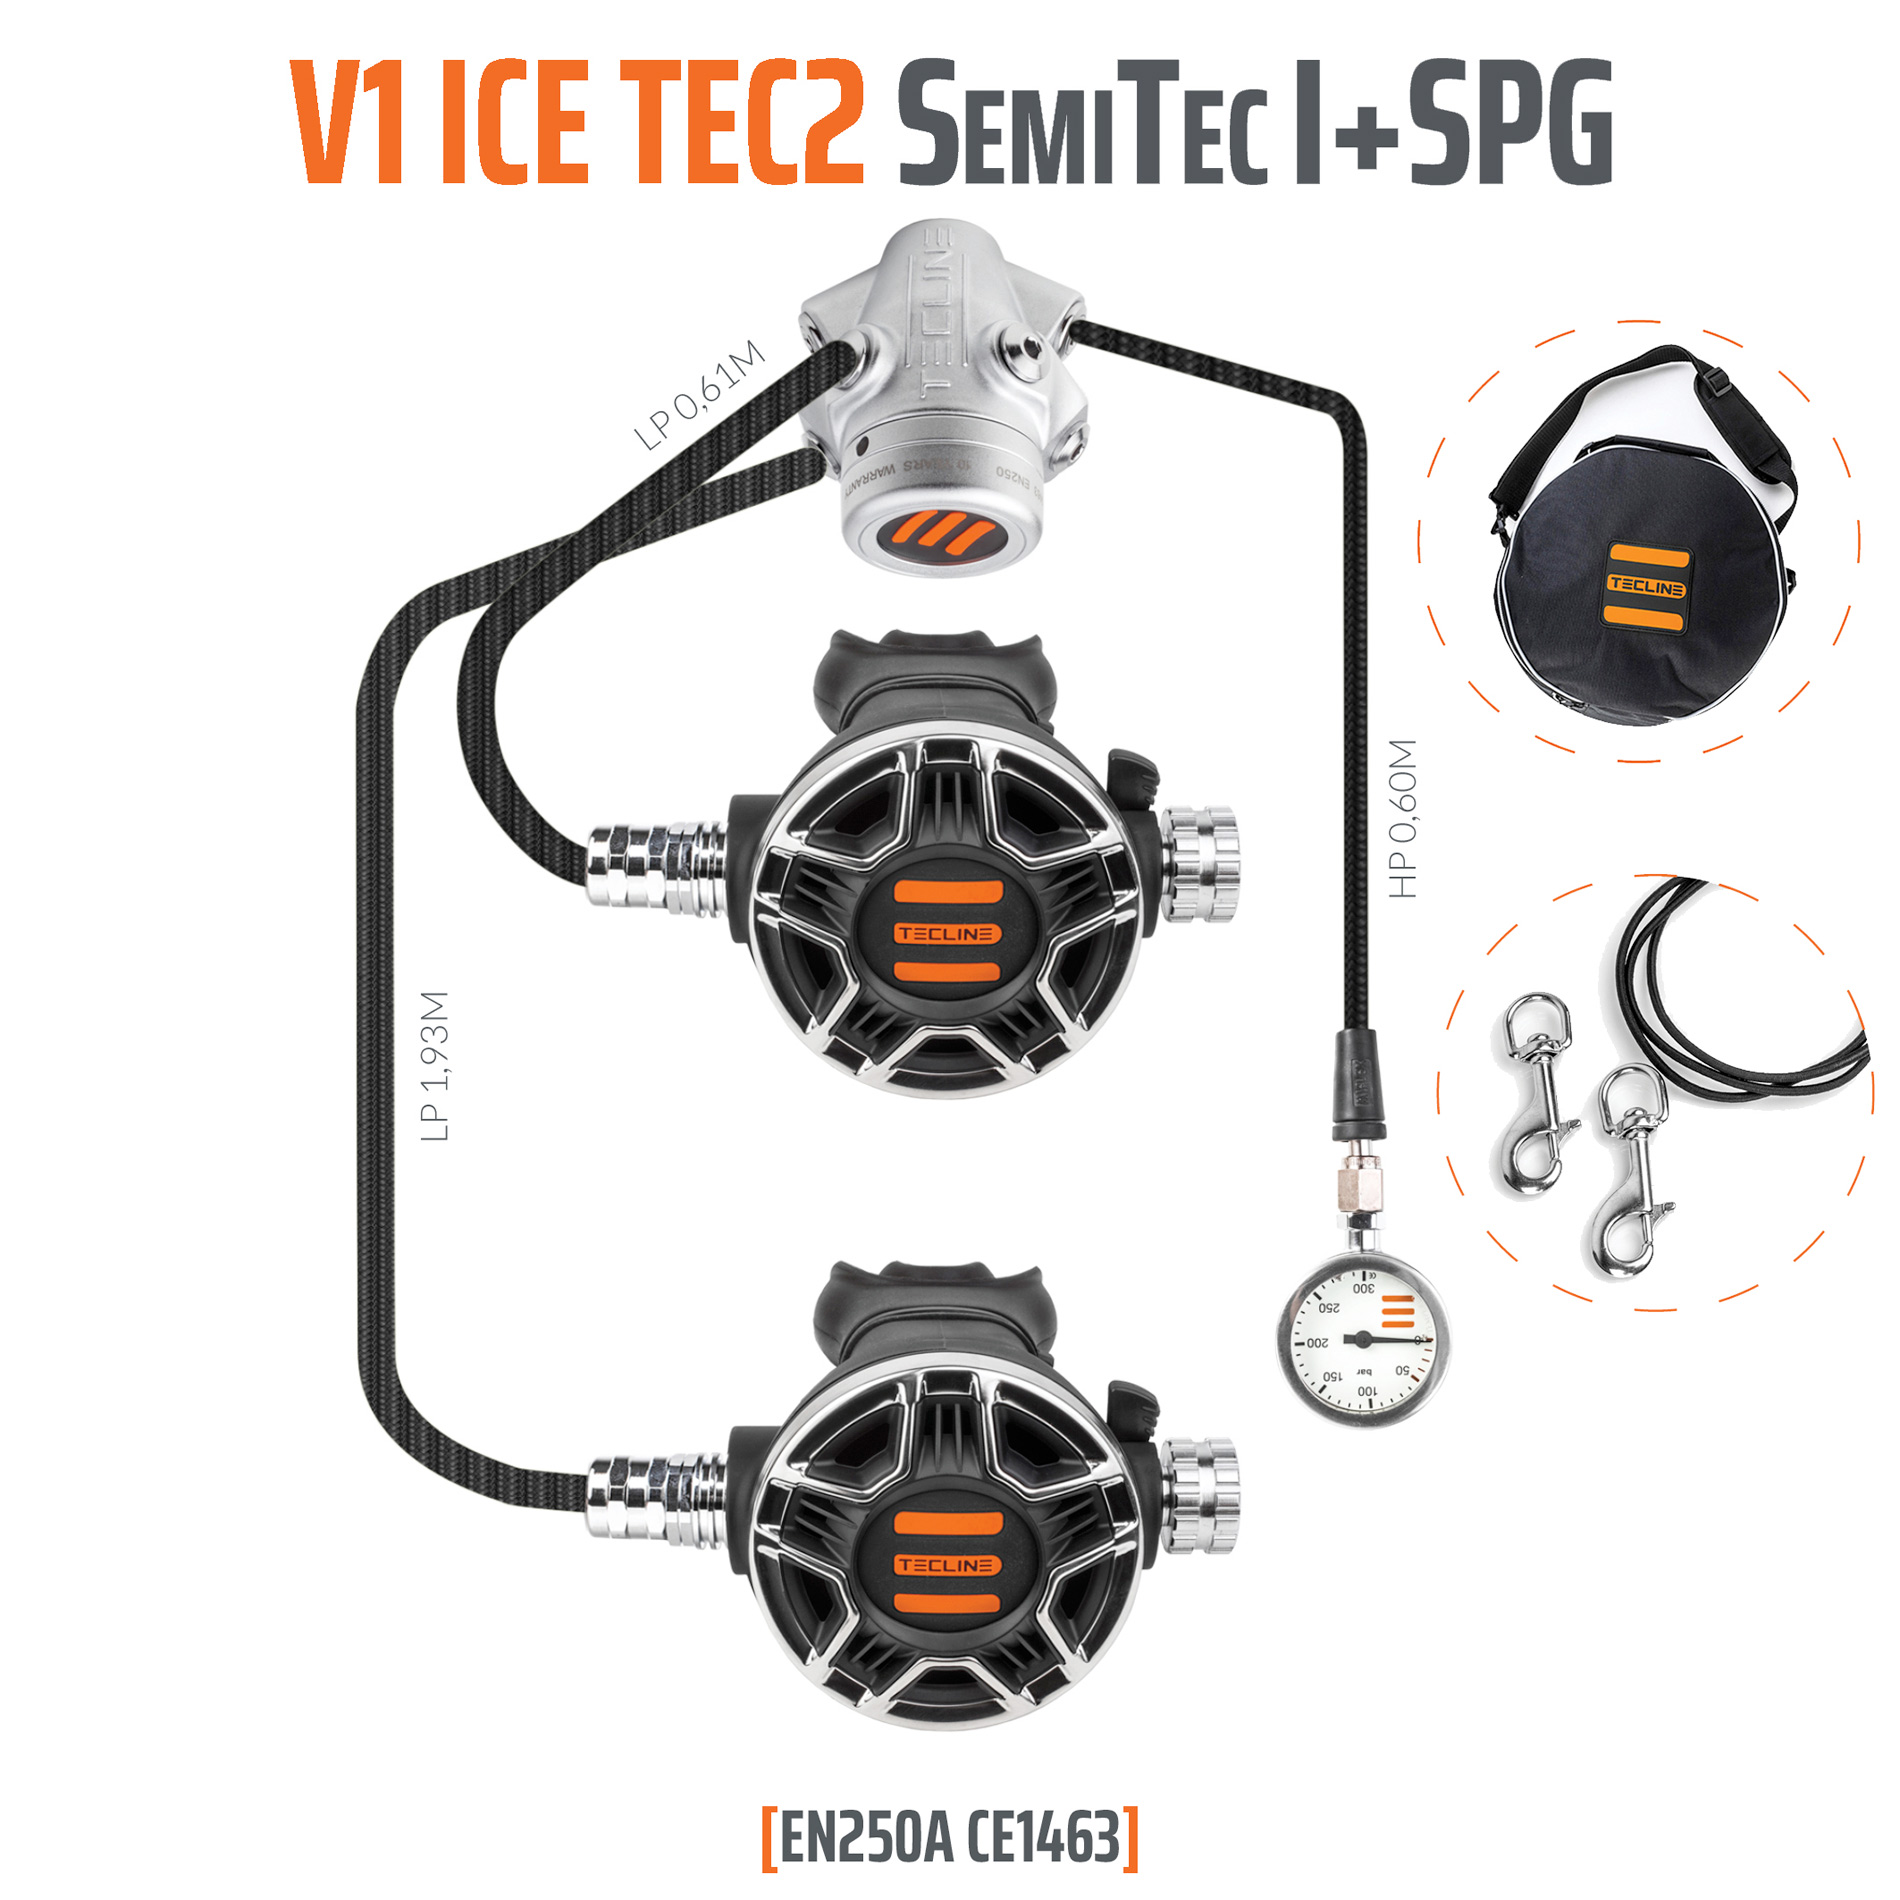 Tecline Regulator V1 ICE TEC2 SemiTec I set with SPG – EN250A